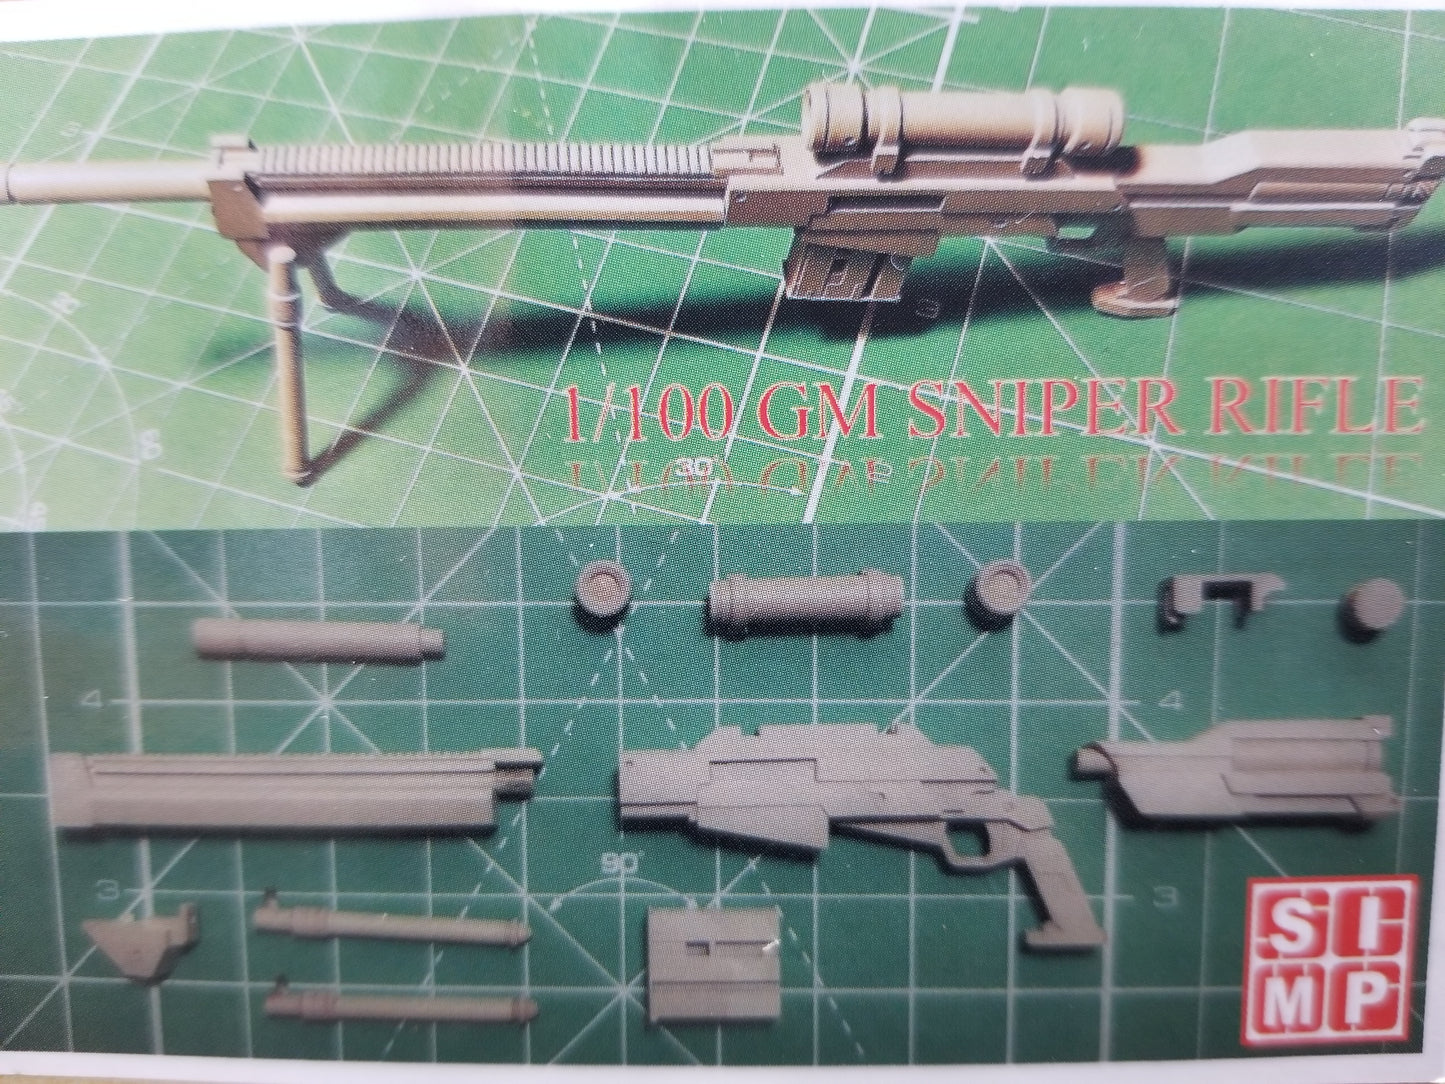 SIMP Models: 1/100 GM Sniper Rifle